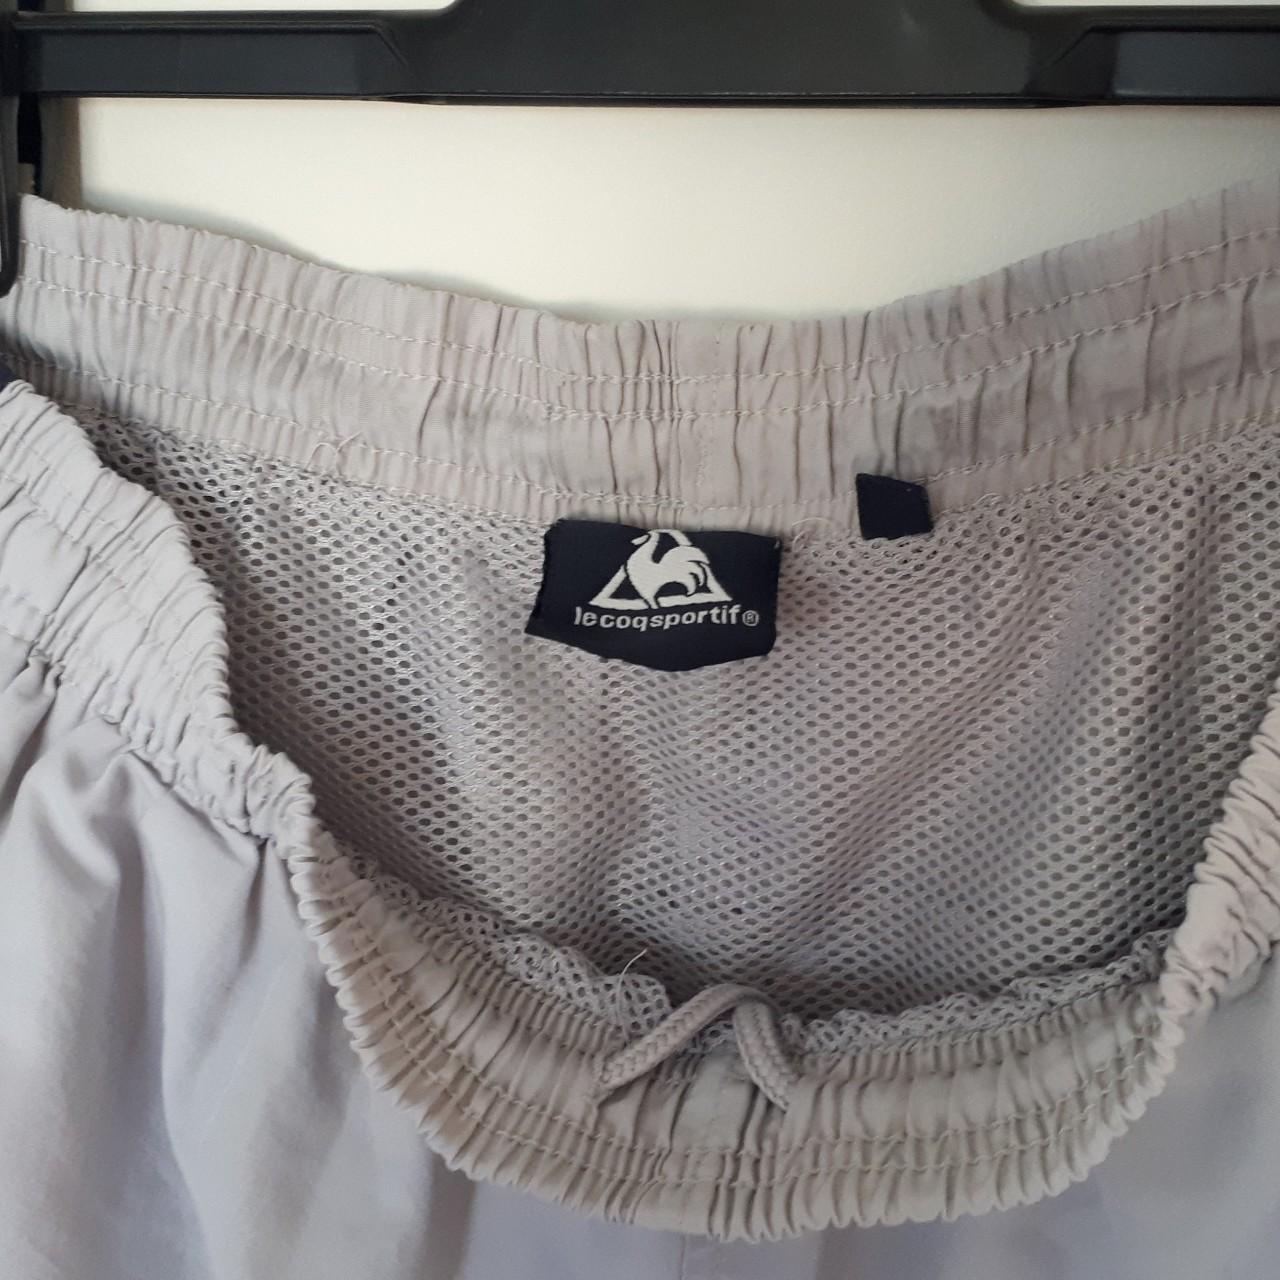 Product Image 3 - Le coq sportif shorts

Light grey